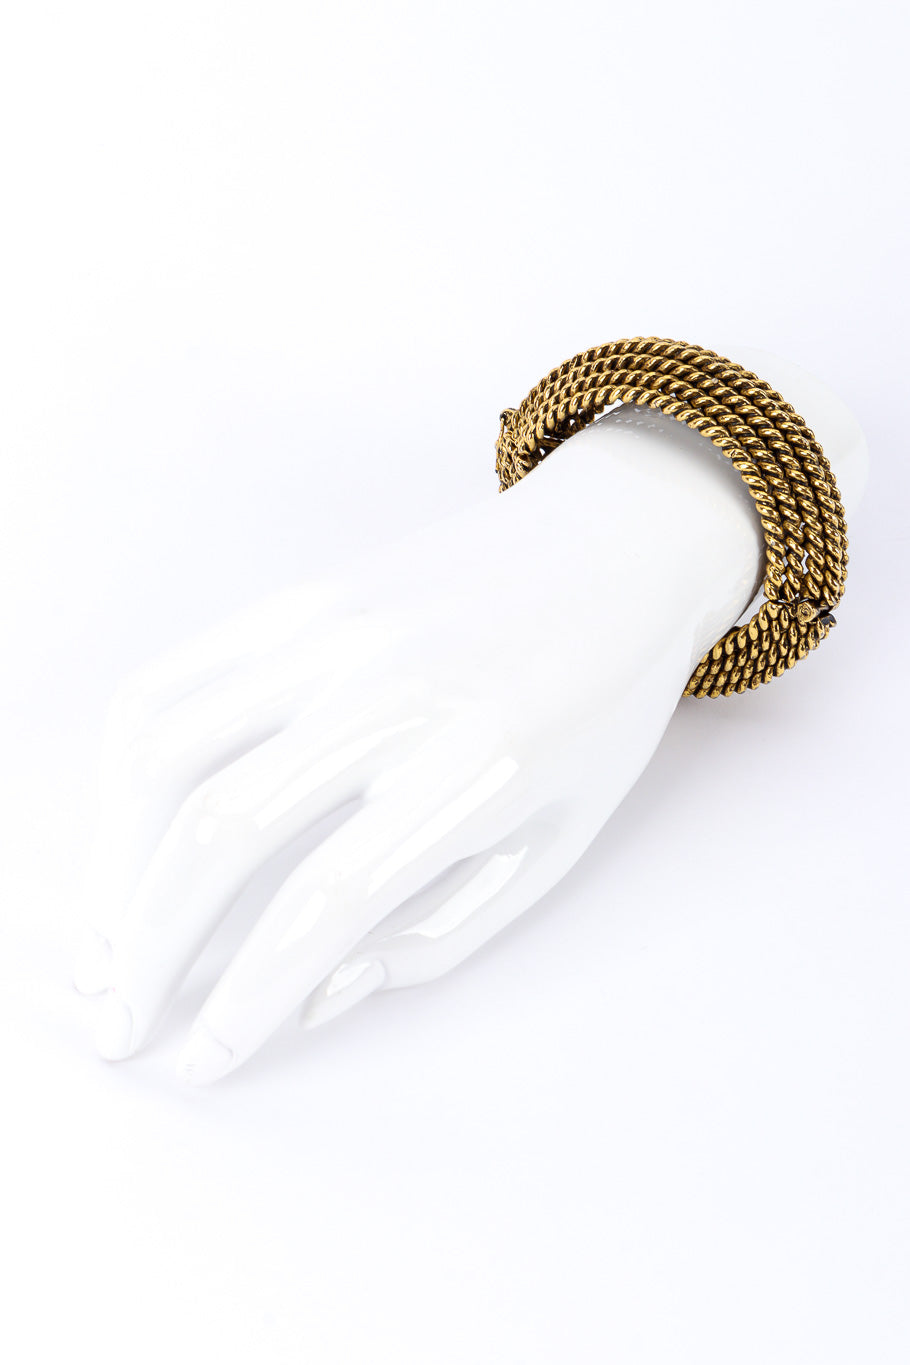 Cuff bracelet by Kenneth Jay Lane on white background on mannequin hand far @recessla